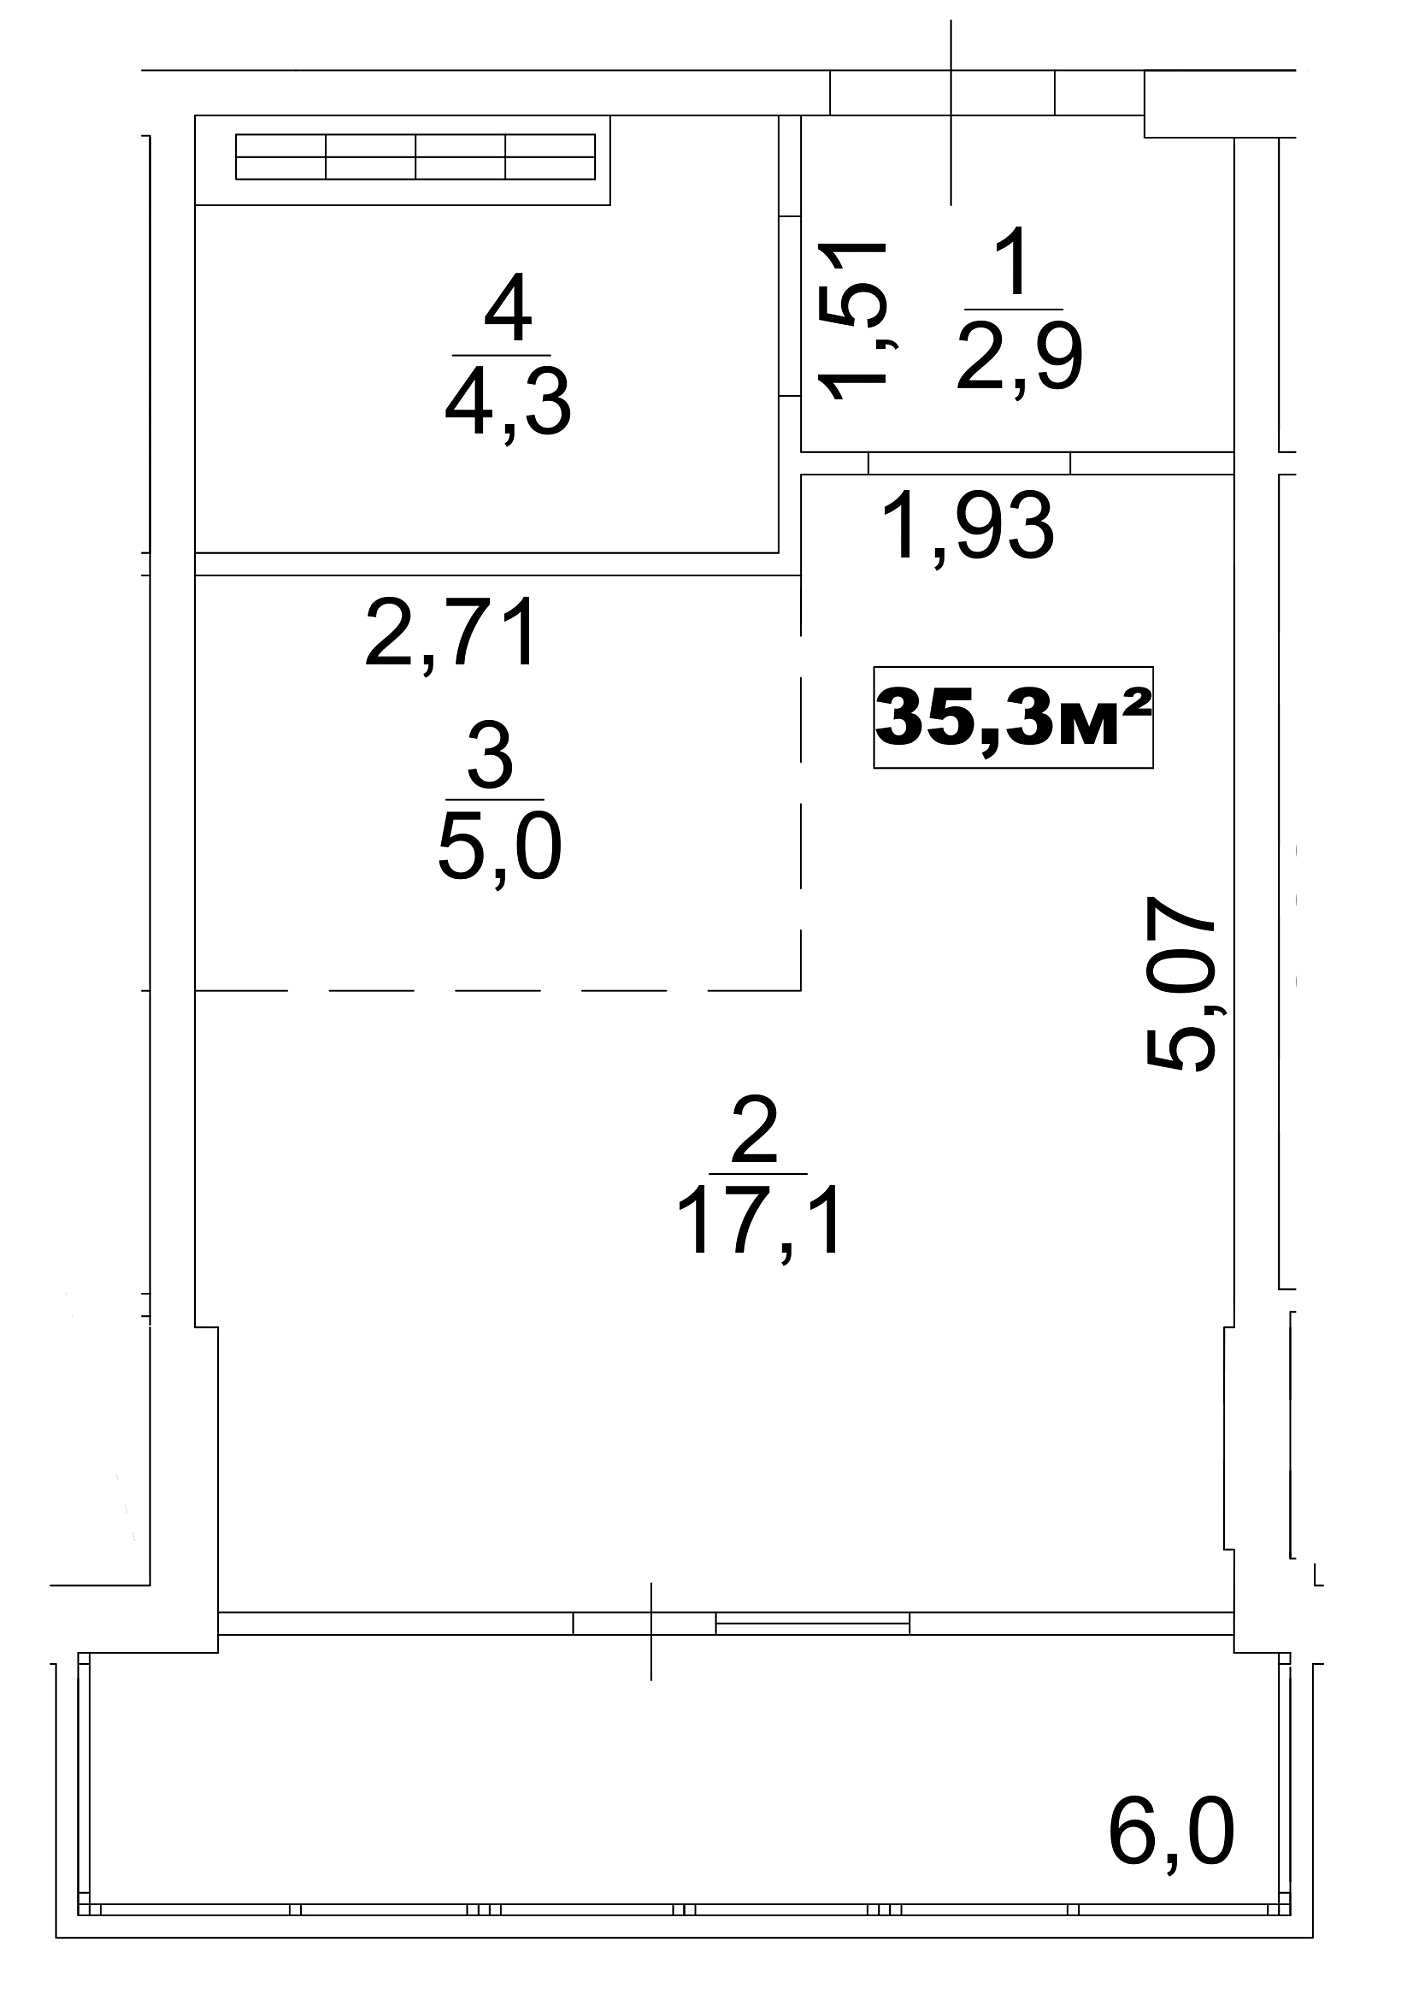 Planning Smart flats area 35.3m2, AB-13-07/0052б.